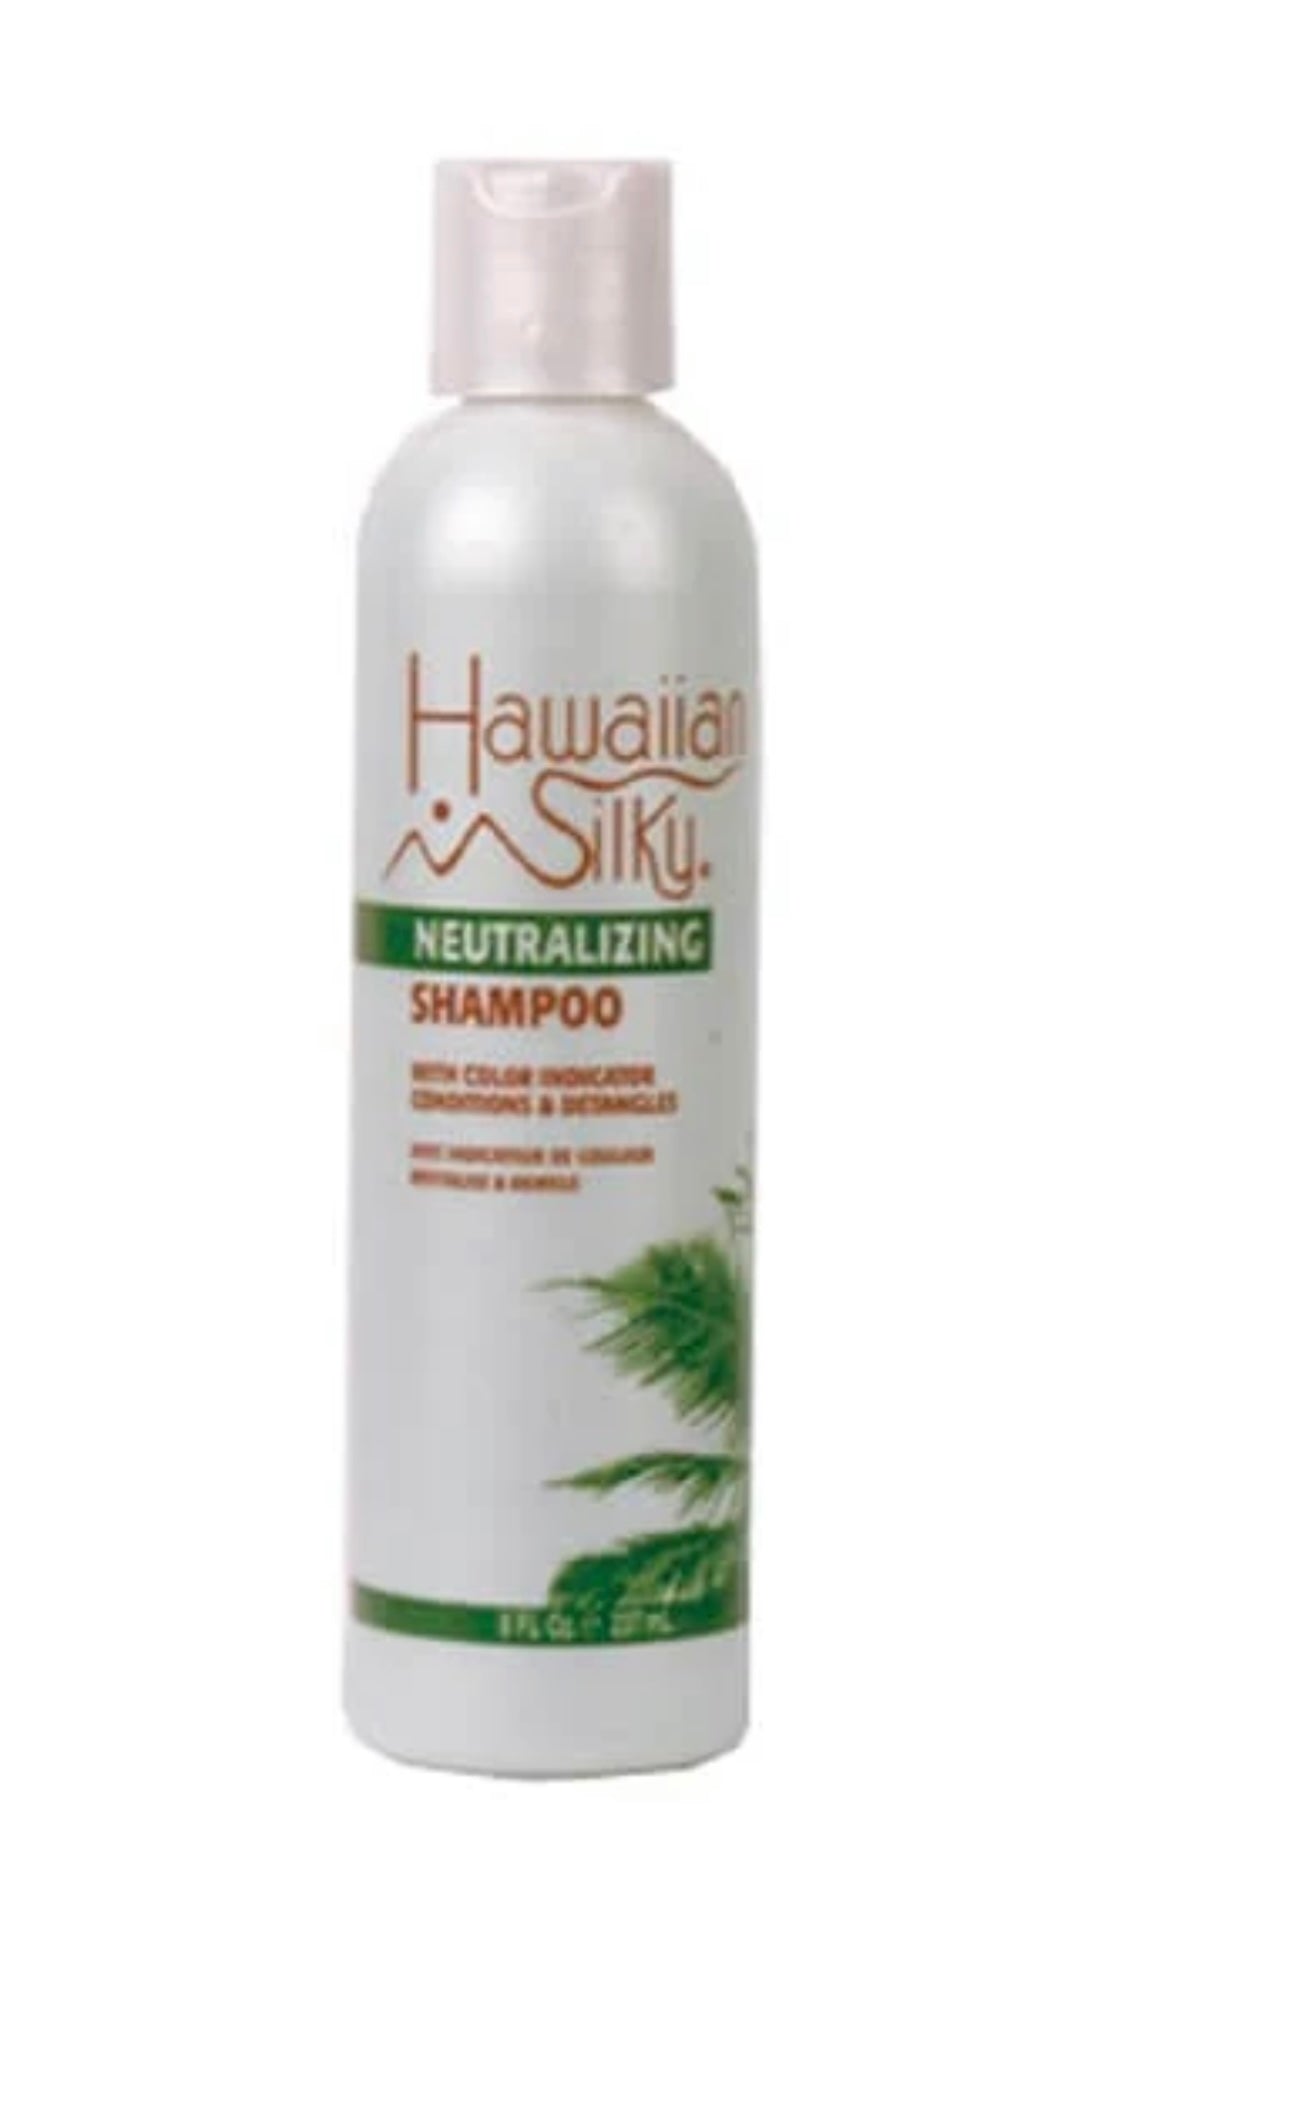 Hawaiian Silky Neutralizing Shampoo With Color Indicator 16oz.